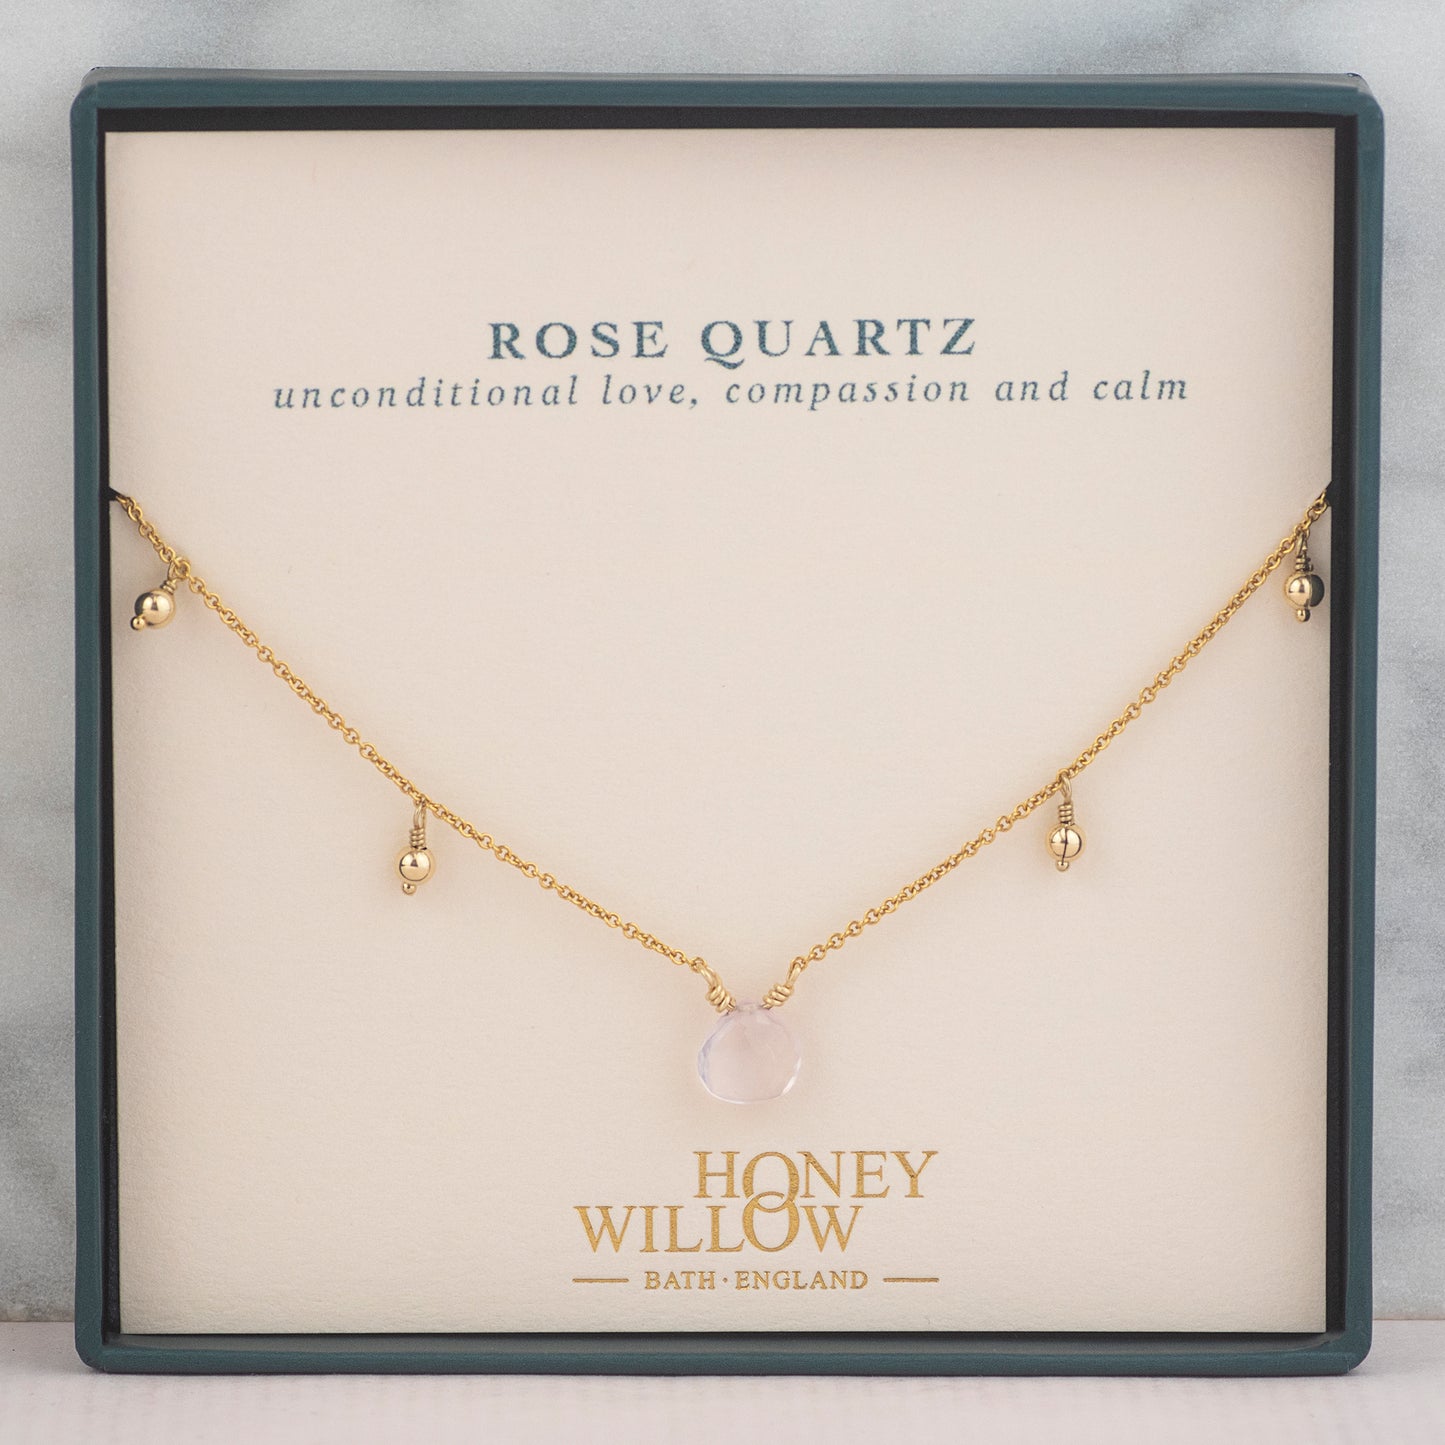 Rose Quartz Necklace - Unconditional love, compassion and calm